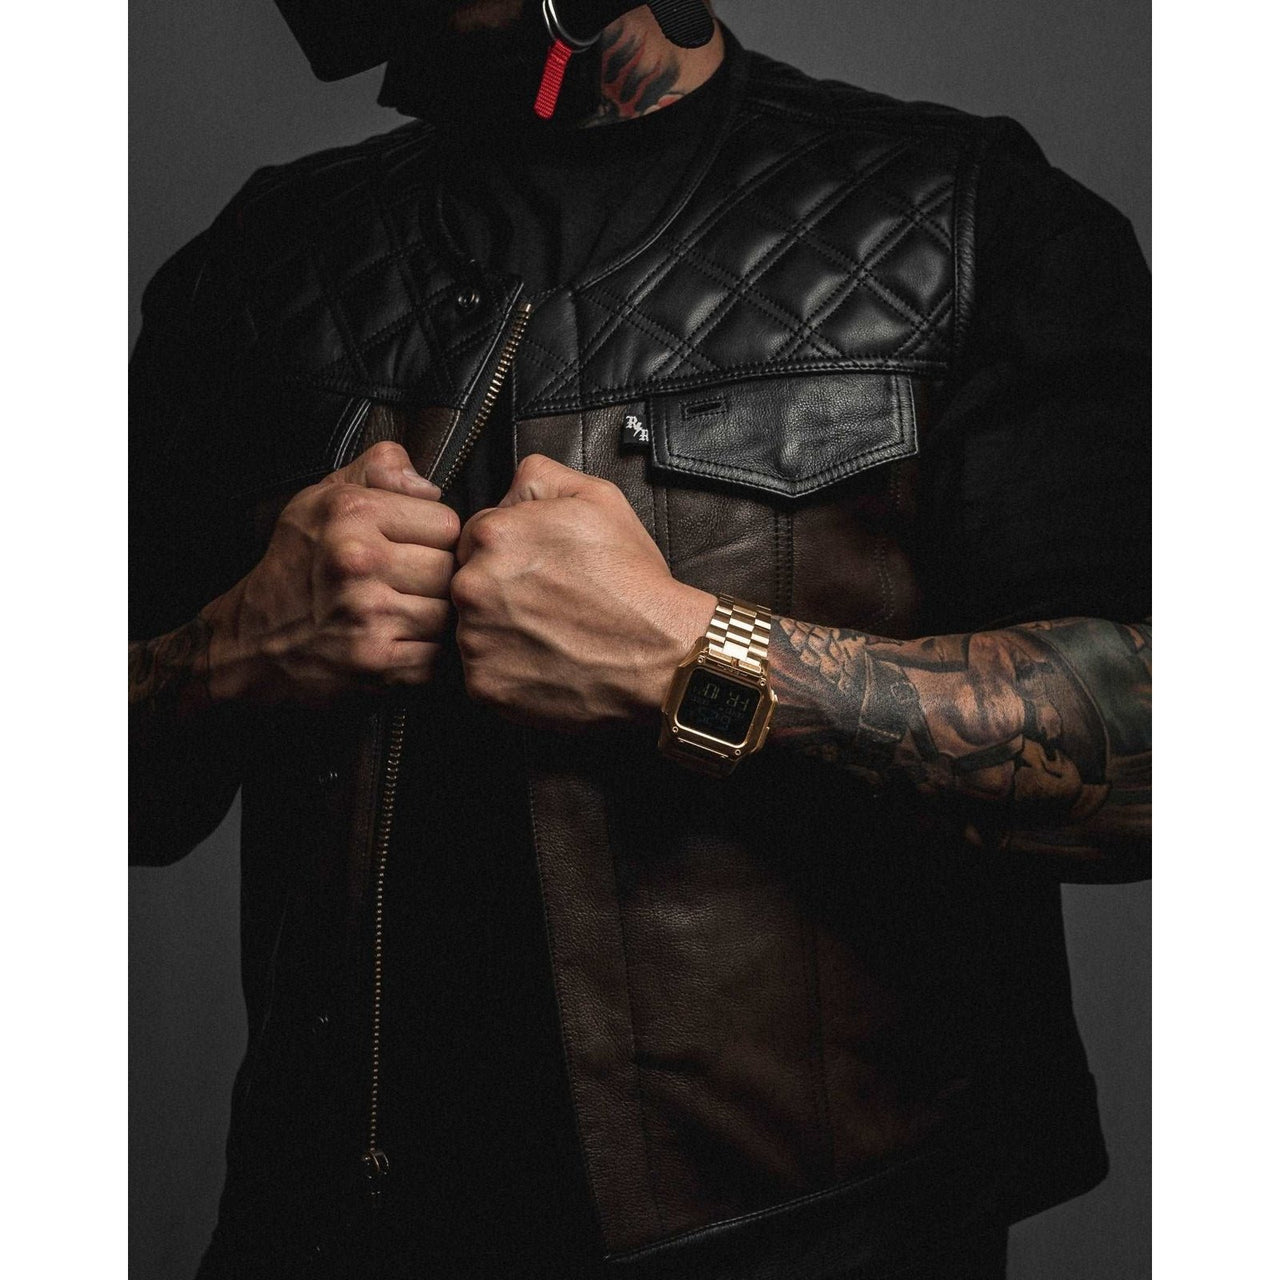 Harvester of Sorrow Black Leather Mens Vest - Rebel Reaper Clothing Company Men's Vest